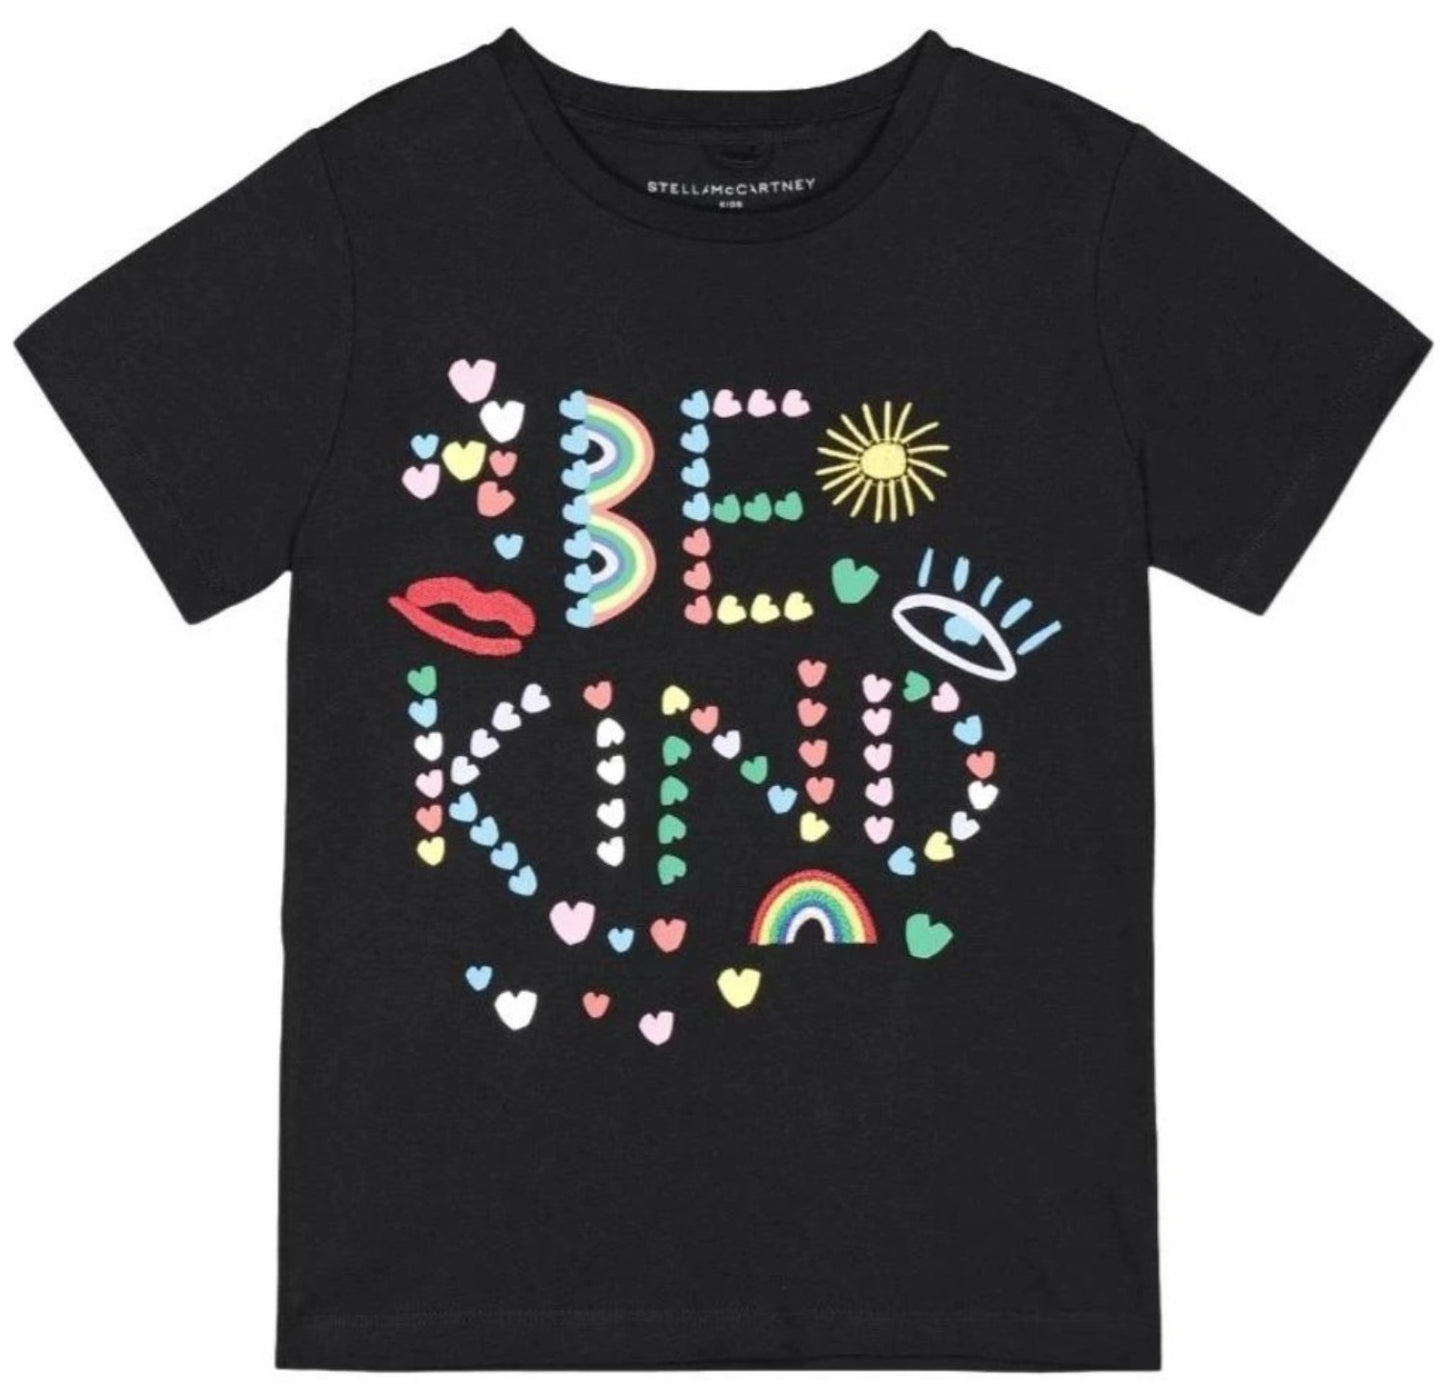 Stella McCartney "BE KIND" T-Shirt